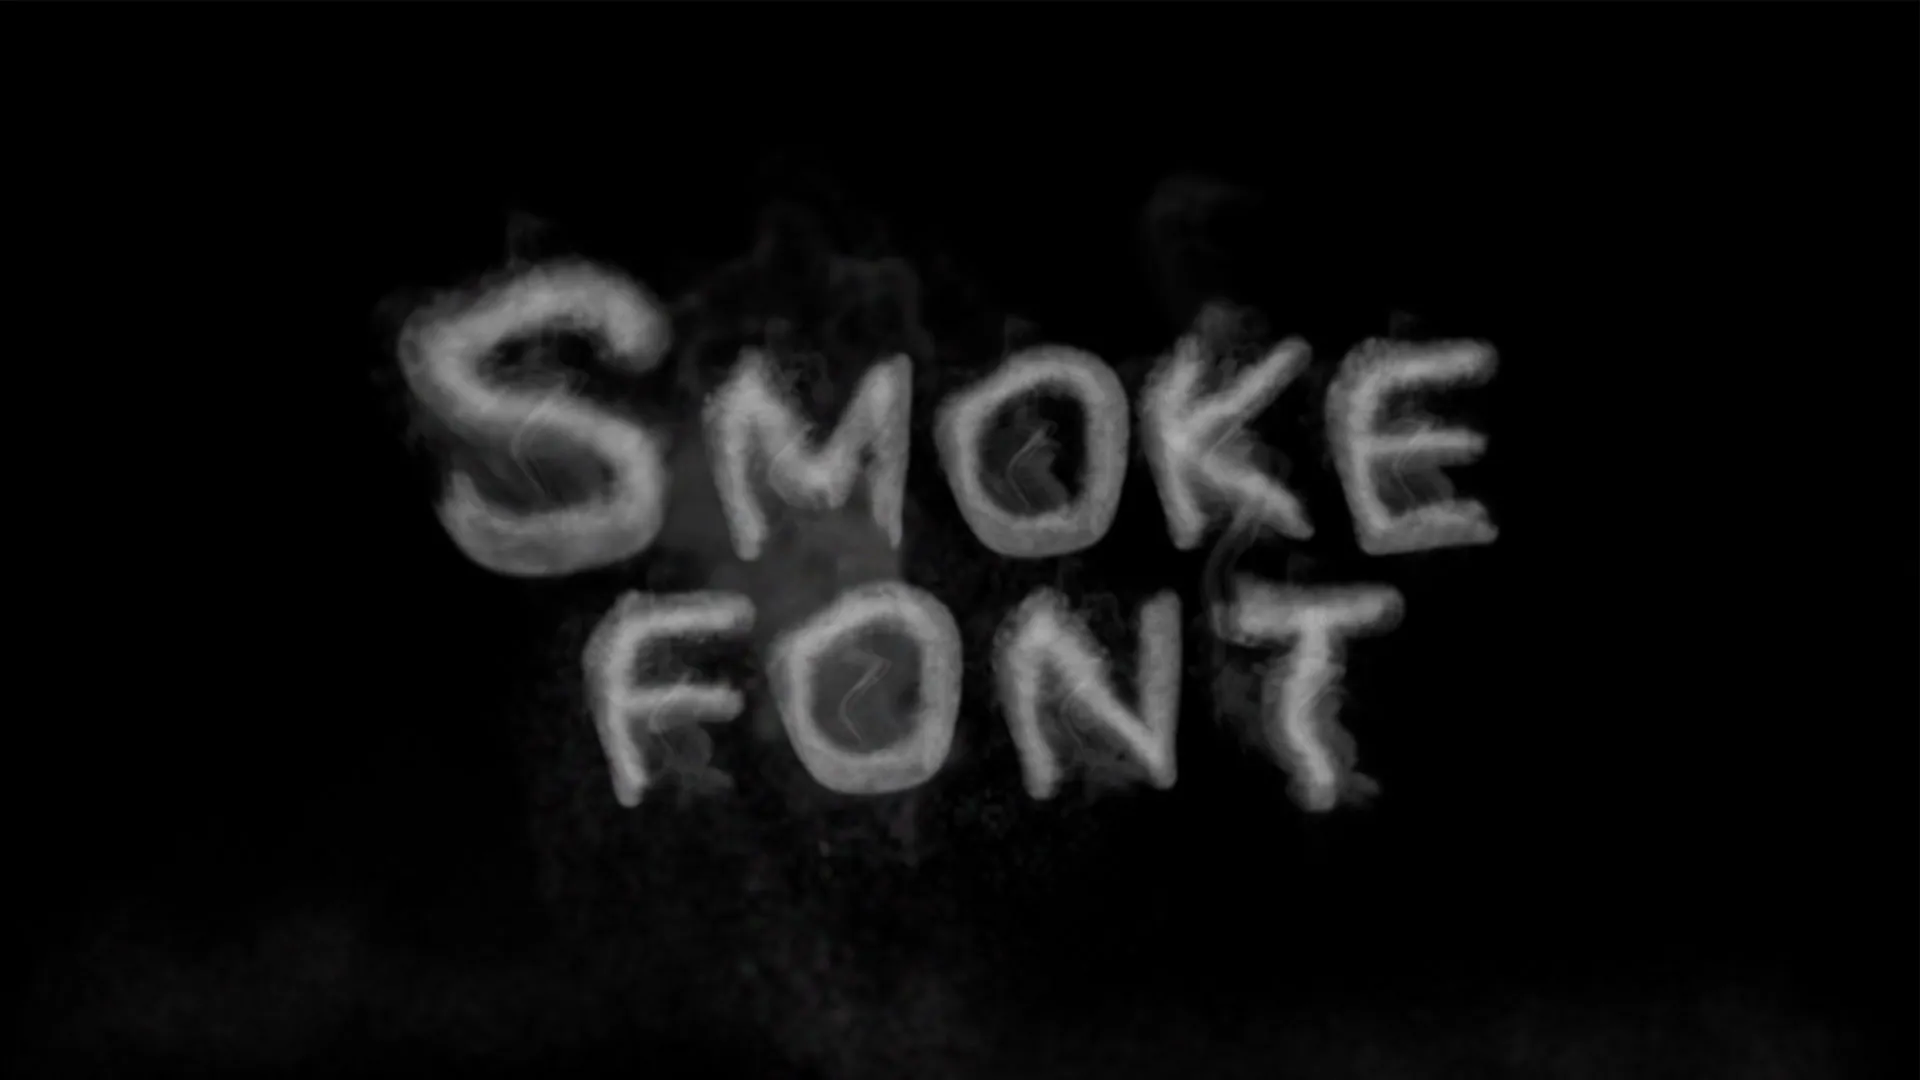 smoke-font